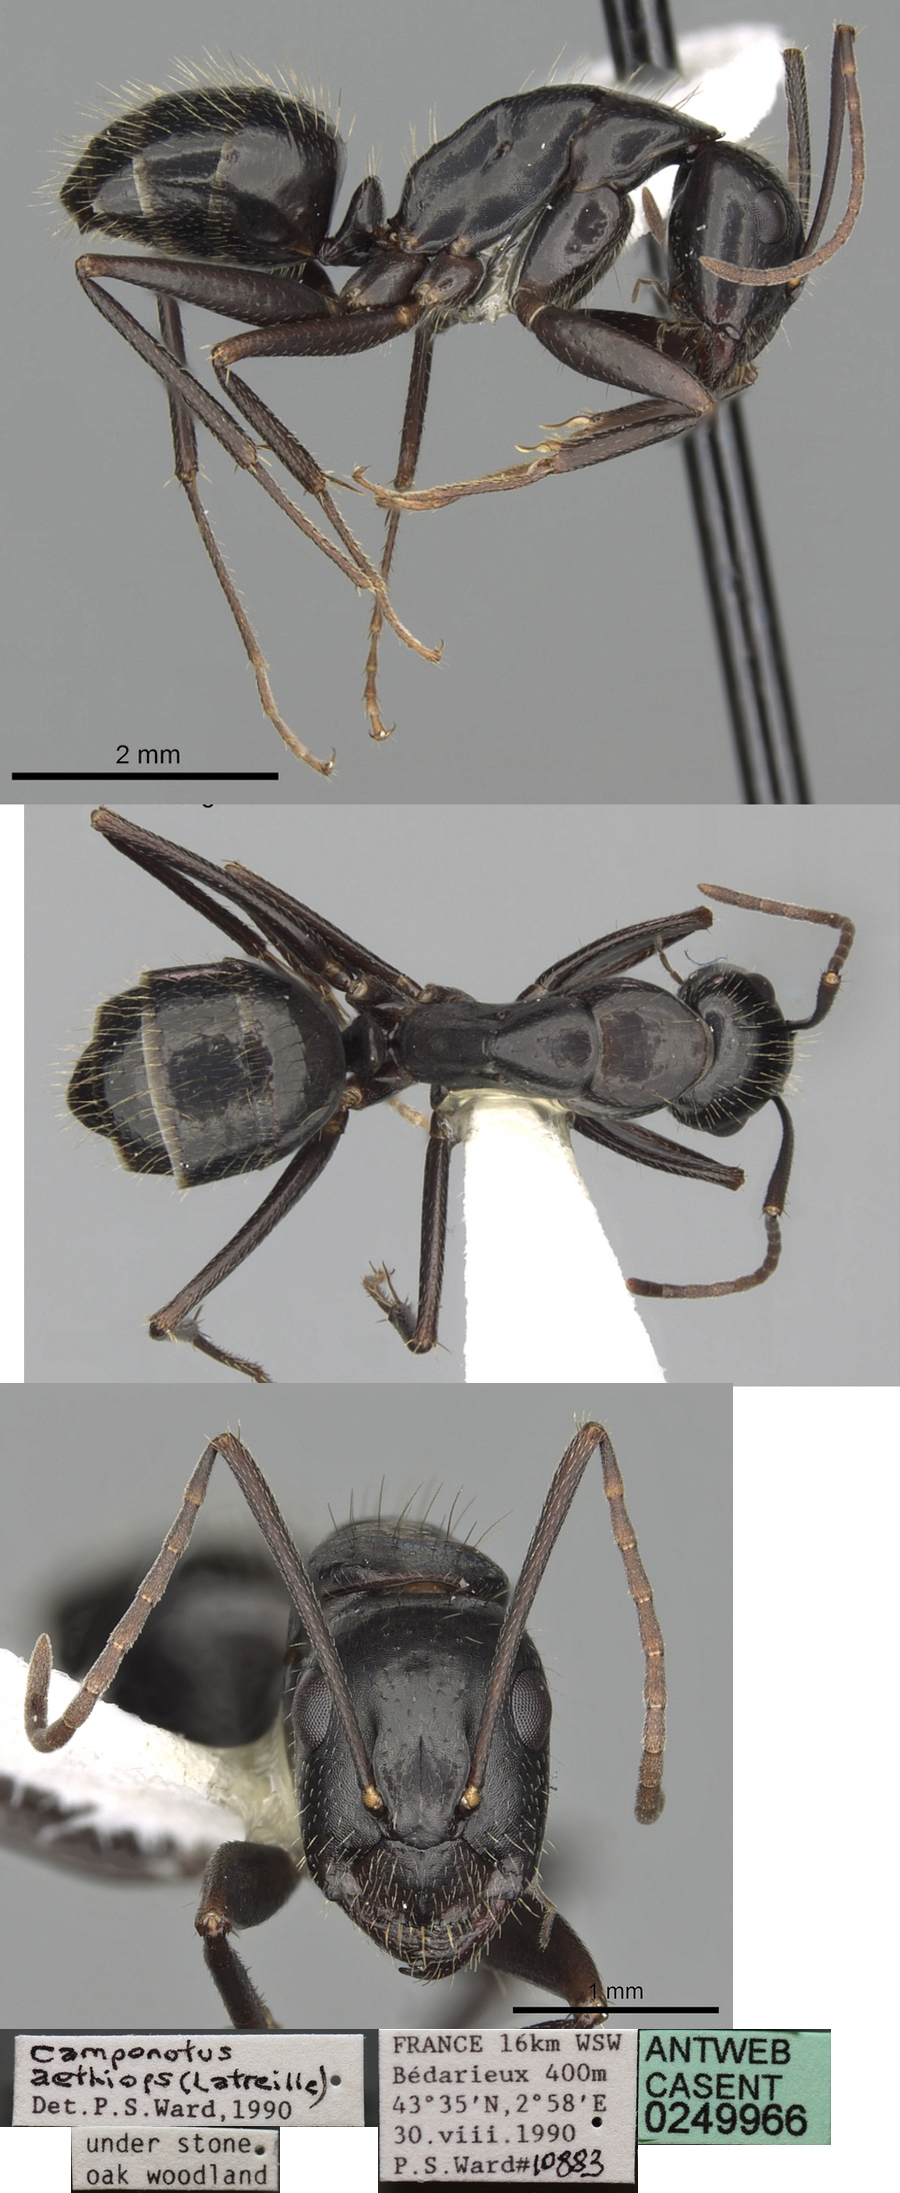 Camponotus aethiops minor